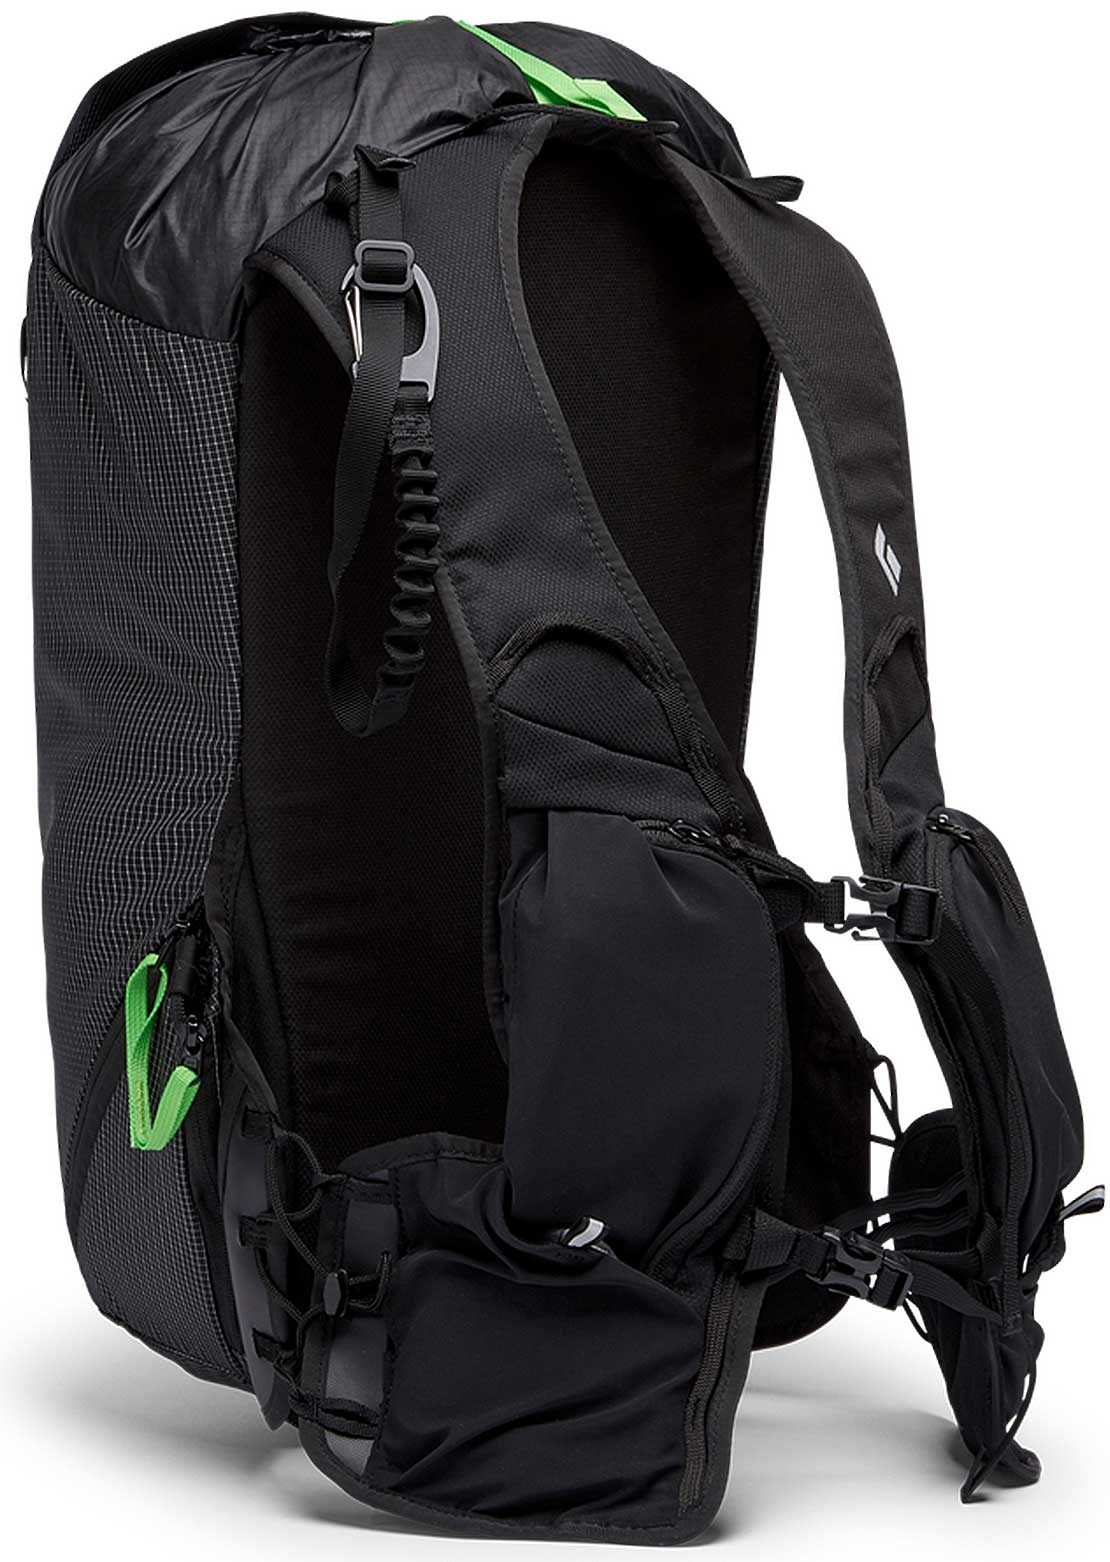 Black Diamond Cirque 22 Ski Vest Backpack